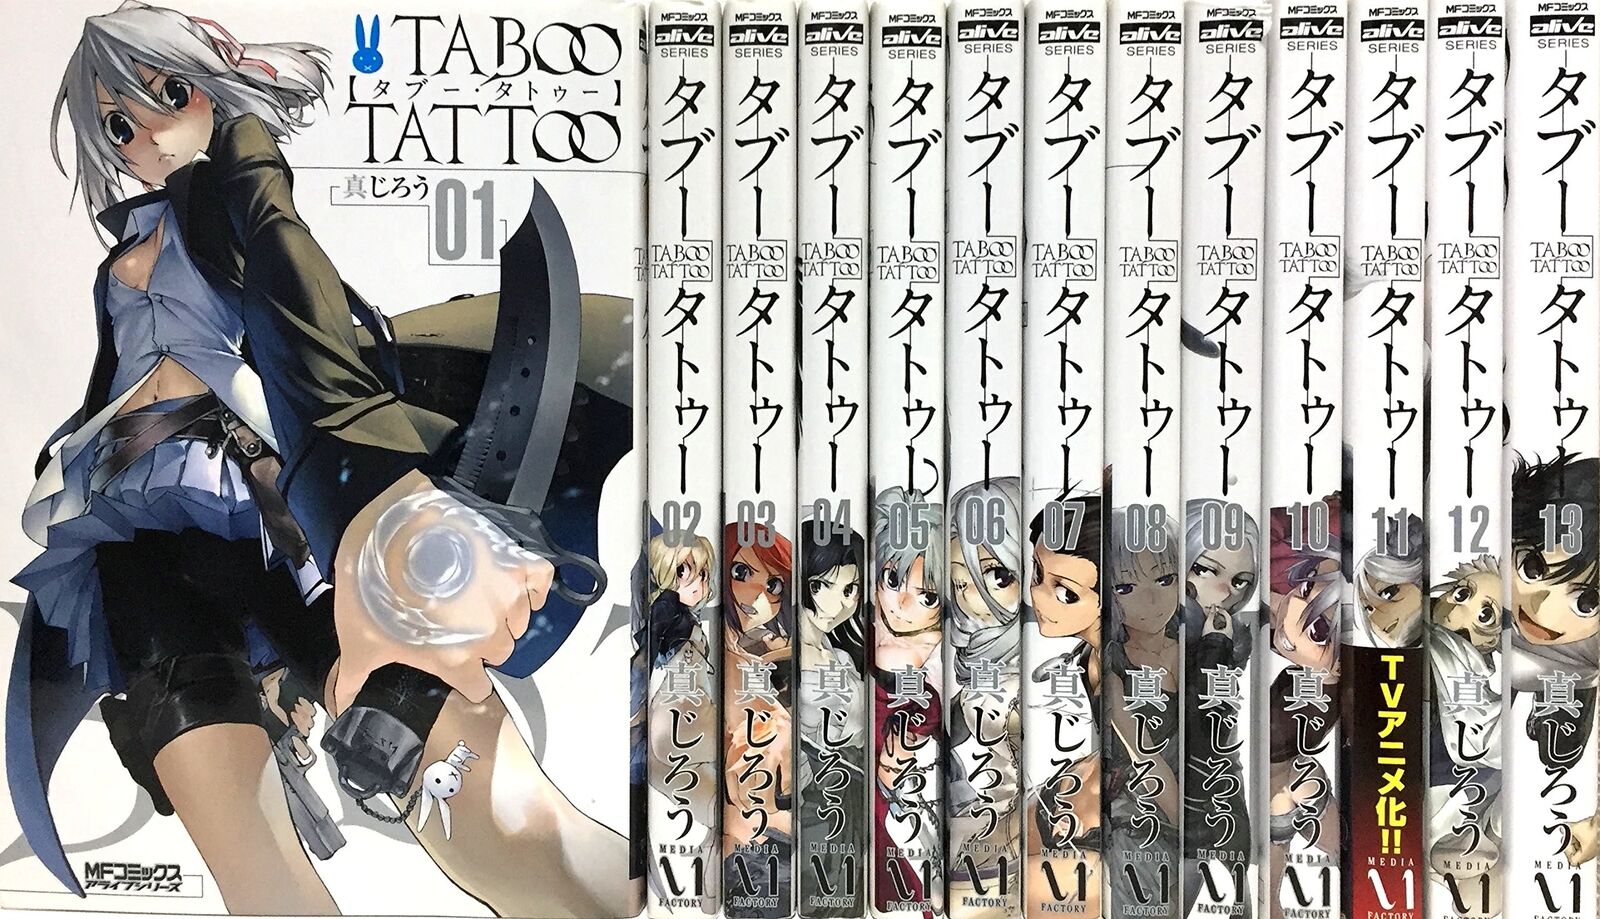 TABOO TATTOO Vol.1-13 Complete Set Manga Comic Book